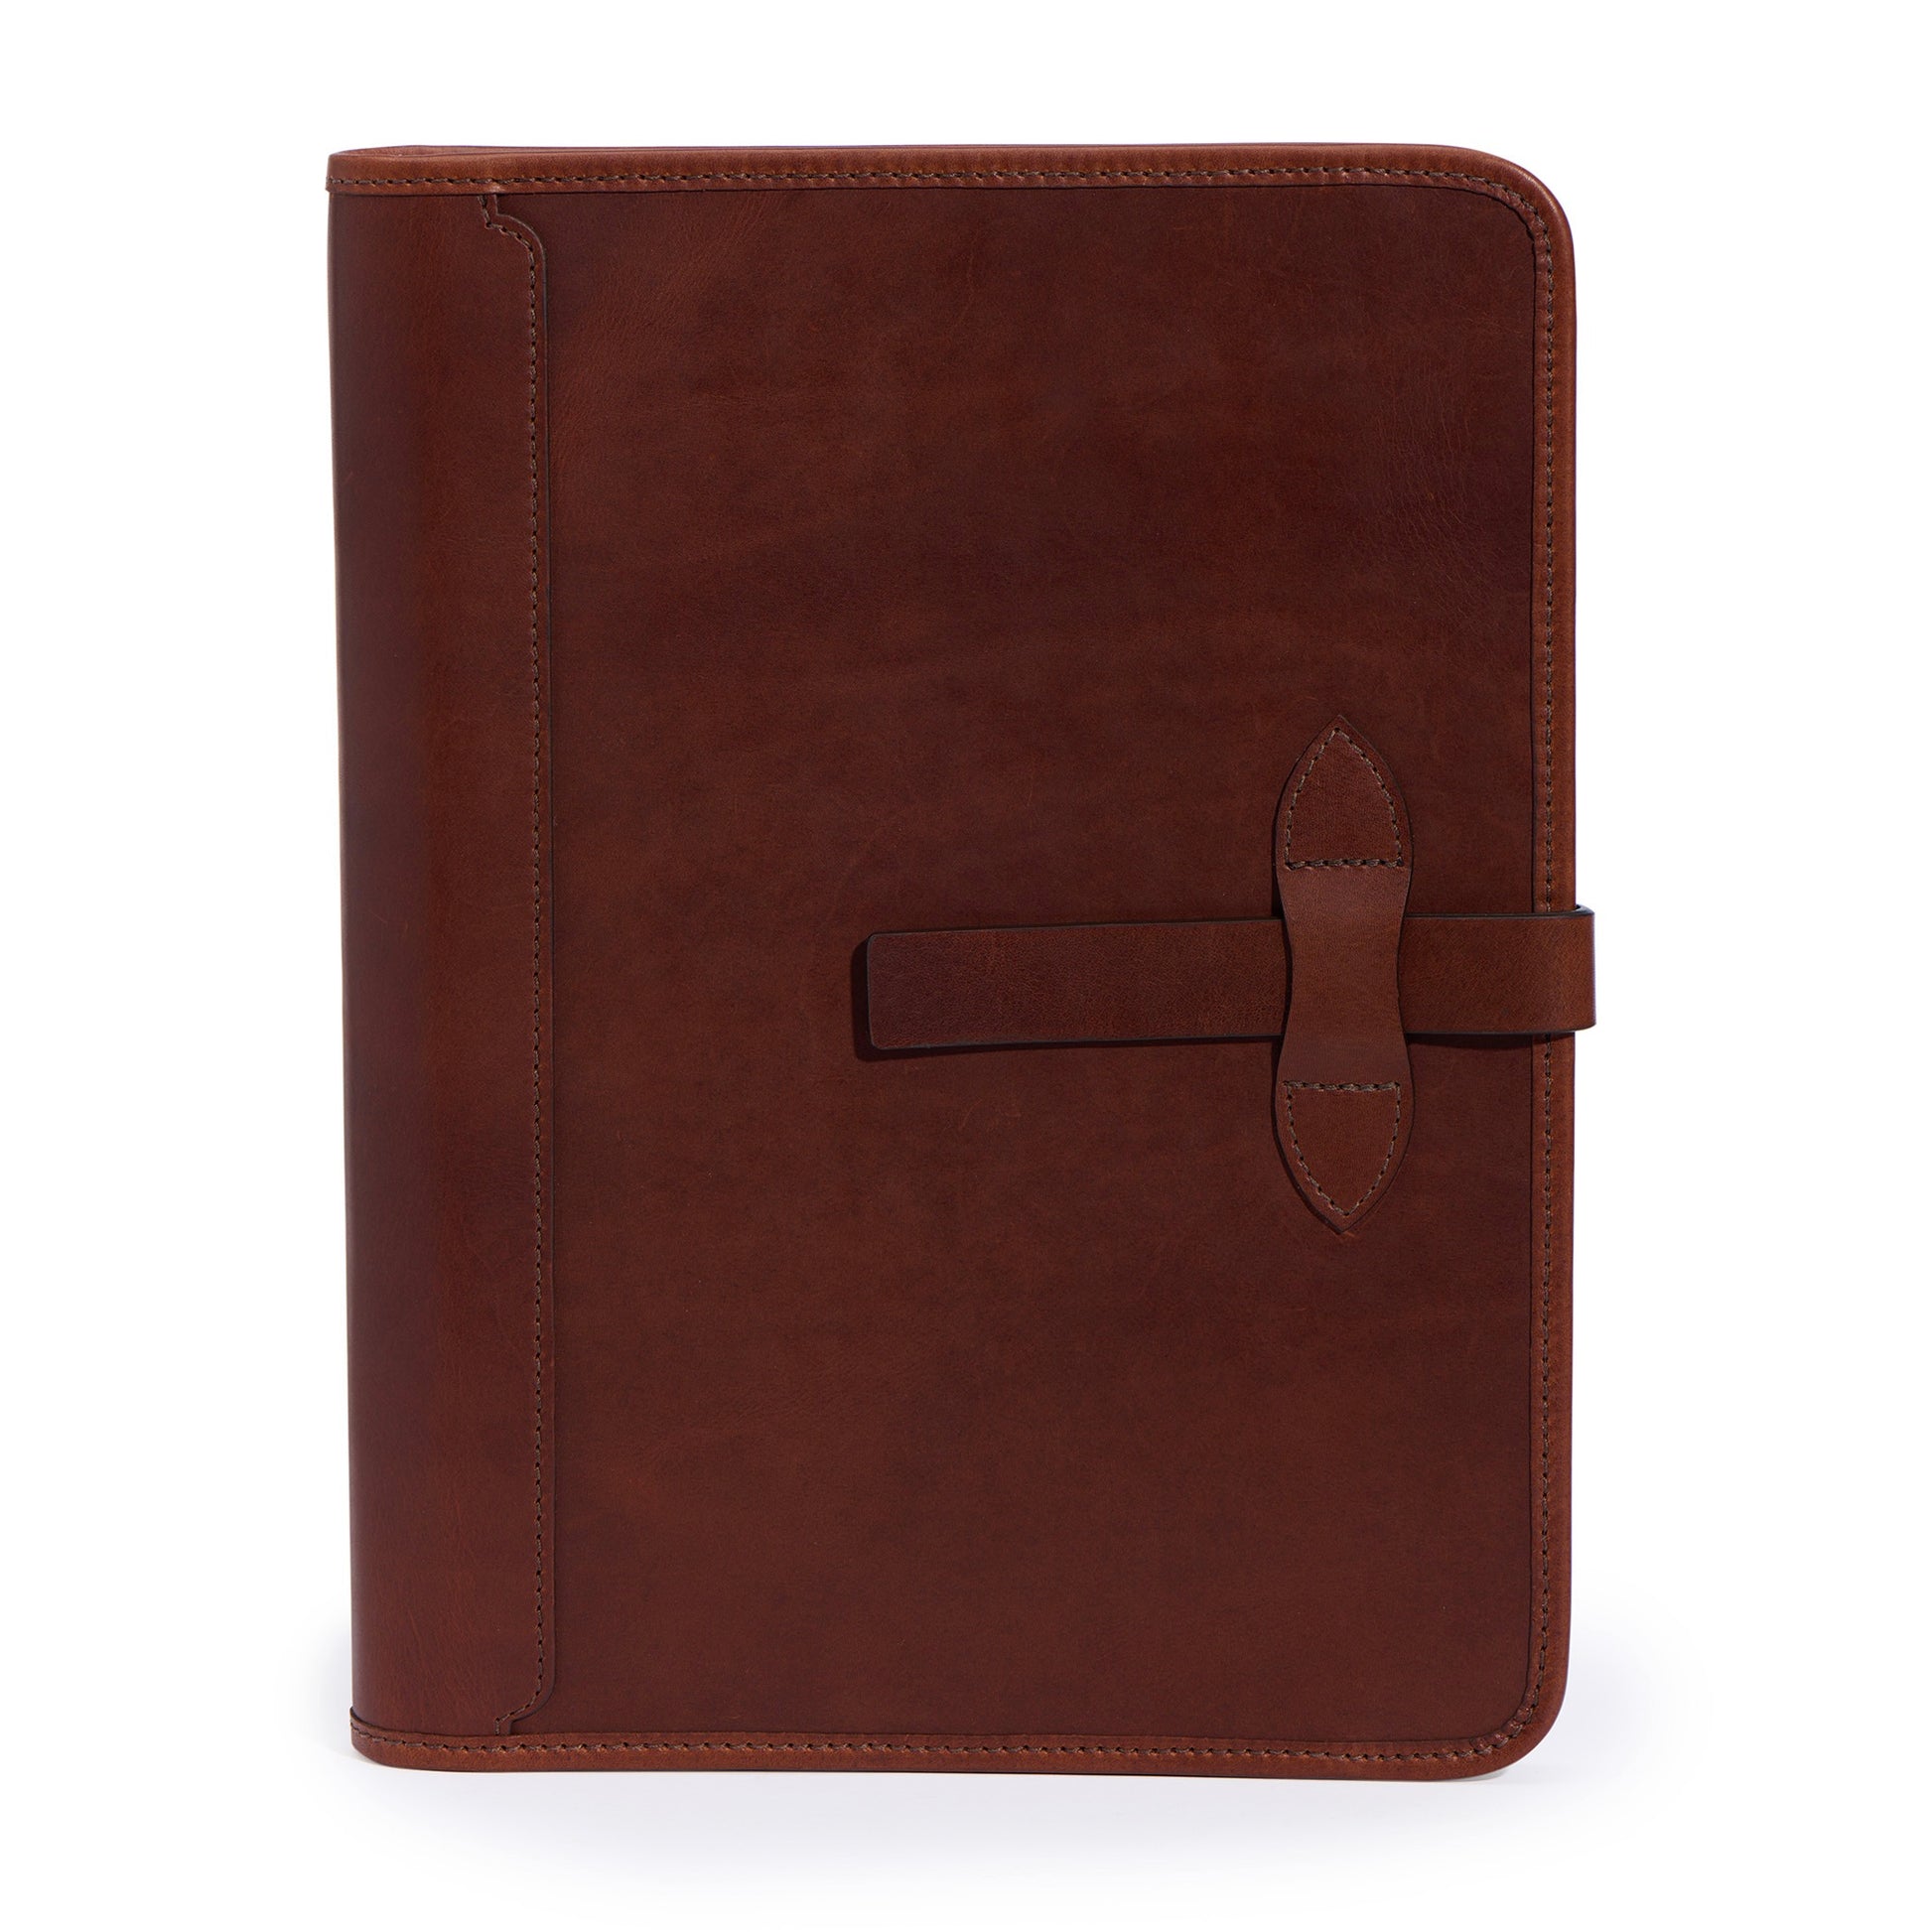 full grain leather portfolio pad folio in vintage brown color by Jackson Wayne 